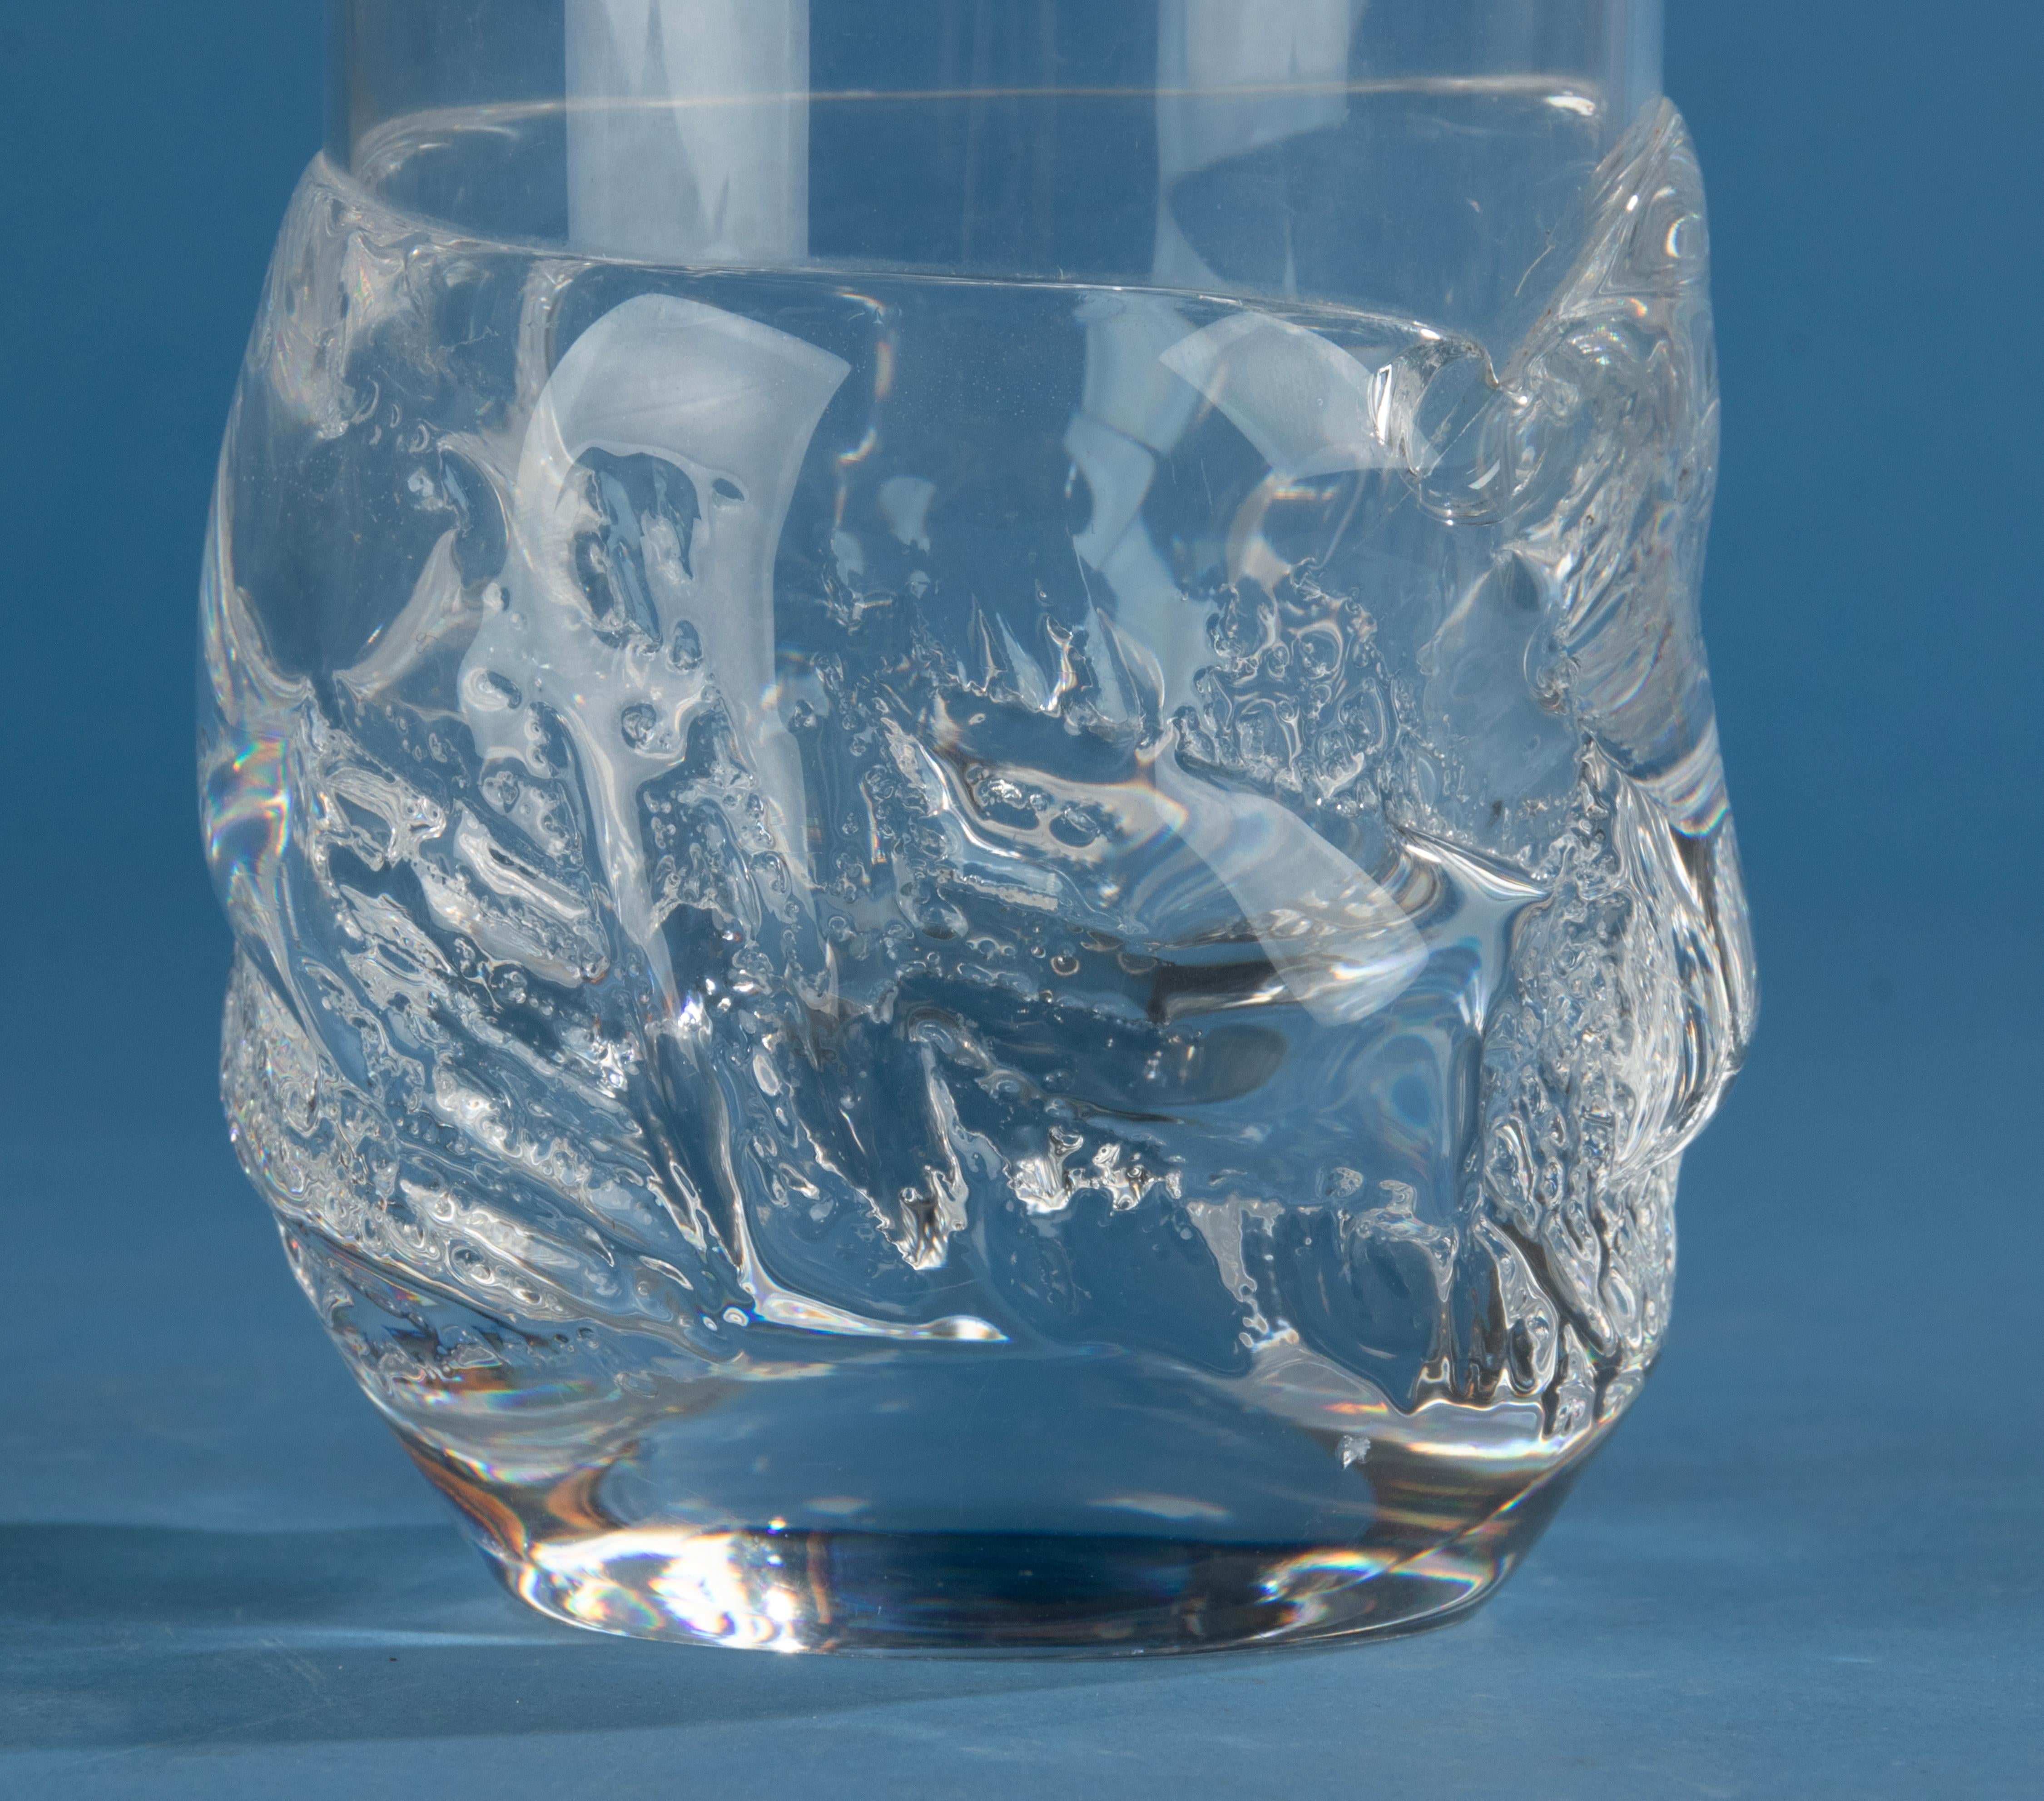 Milieu du XXe siècle Vase en cristal moderne du milieu du 20e siècle - Daum - France  en vente